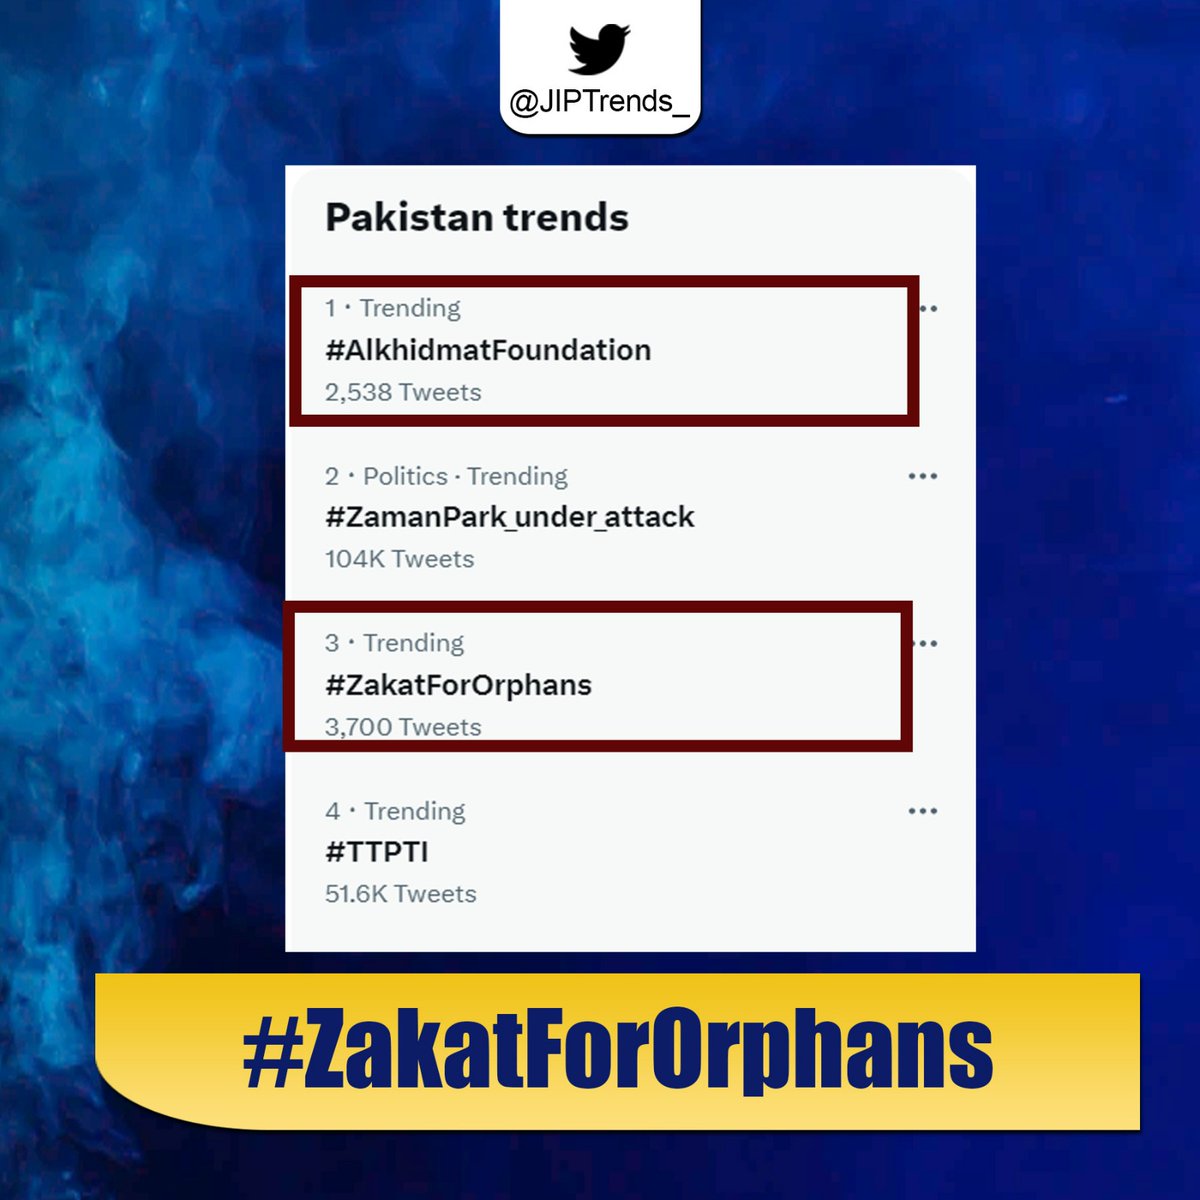 Alhamdulillah it is trending now at top in Pakistan well done guys keep tweeting......
Jzakallah 
#AlkhidmatFoundation
#Zakatfororphans